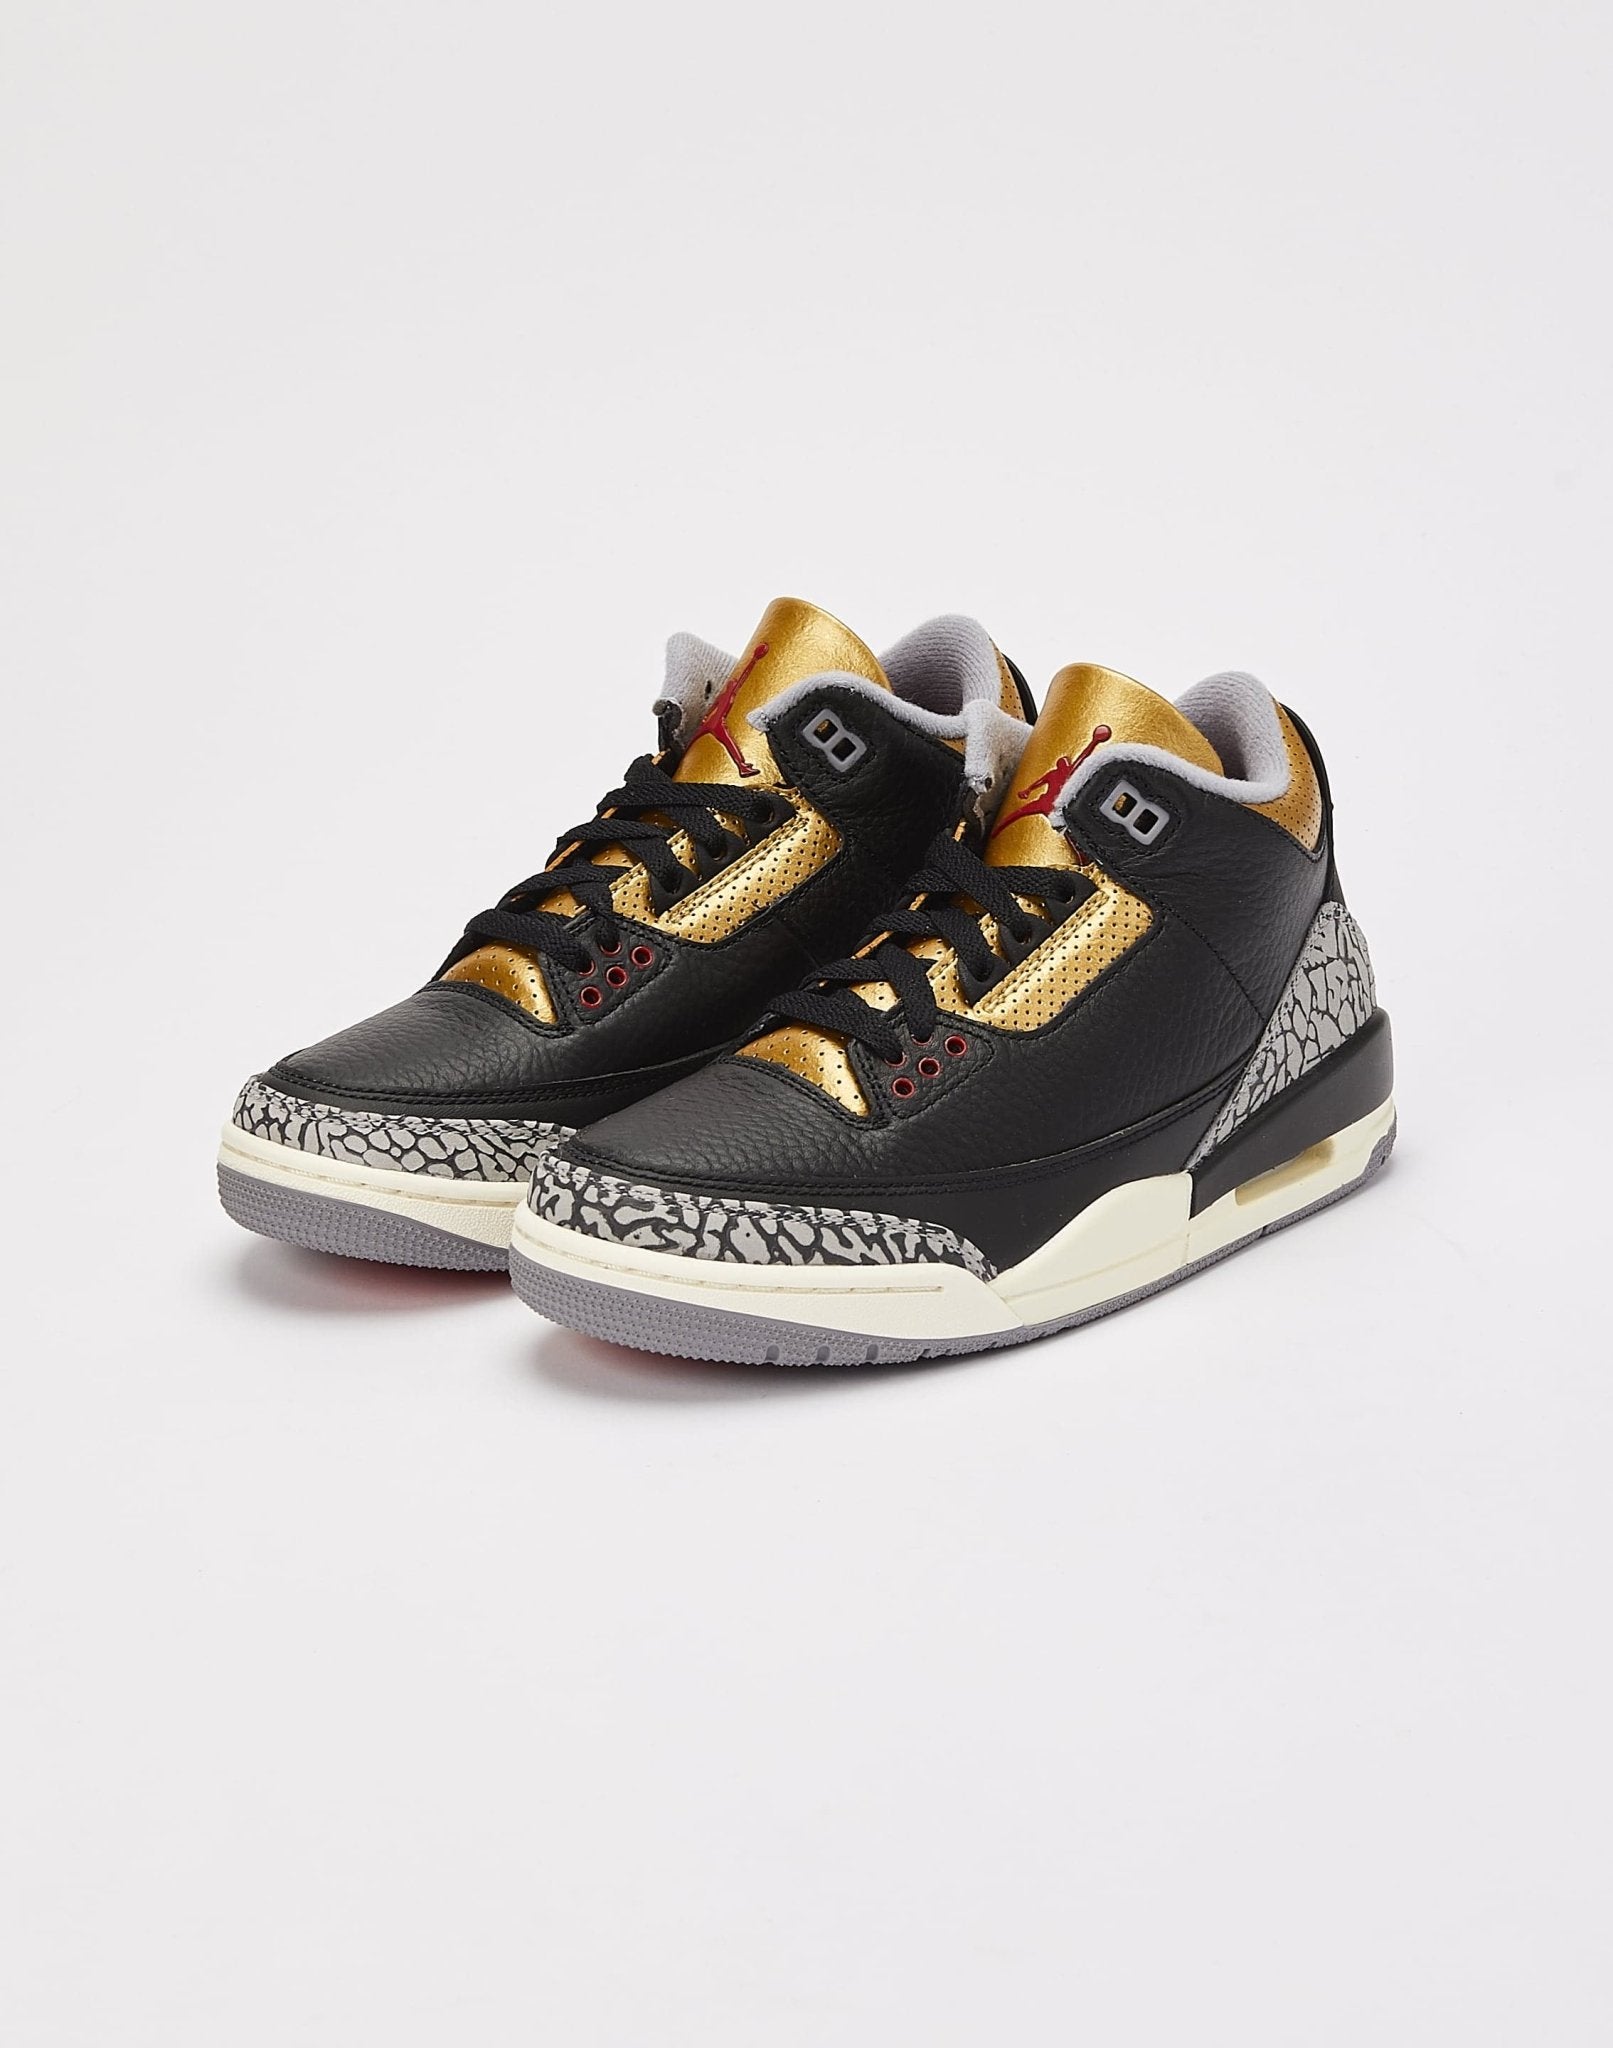 Jordan Air Jordan 3 Retro 'Black Cement Gold' - TJ Outlet